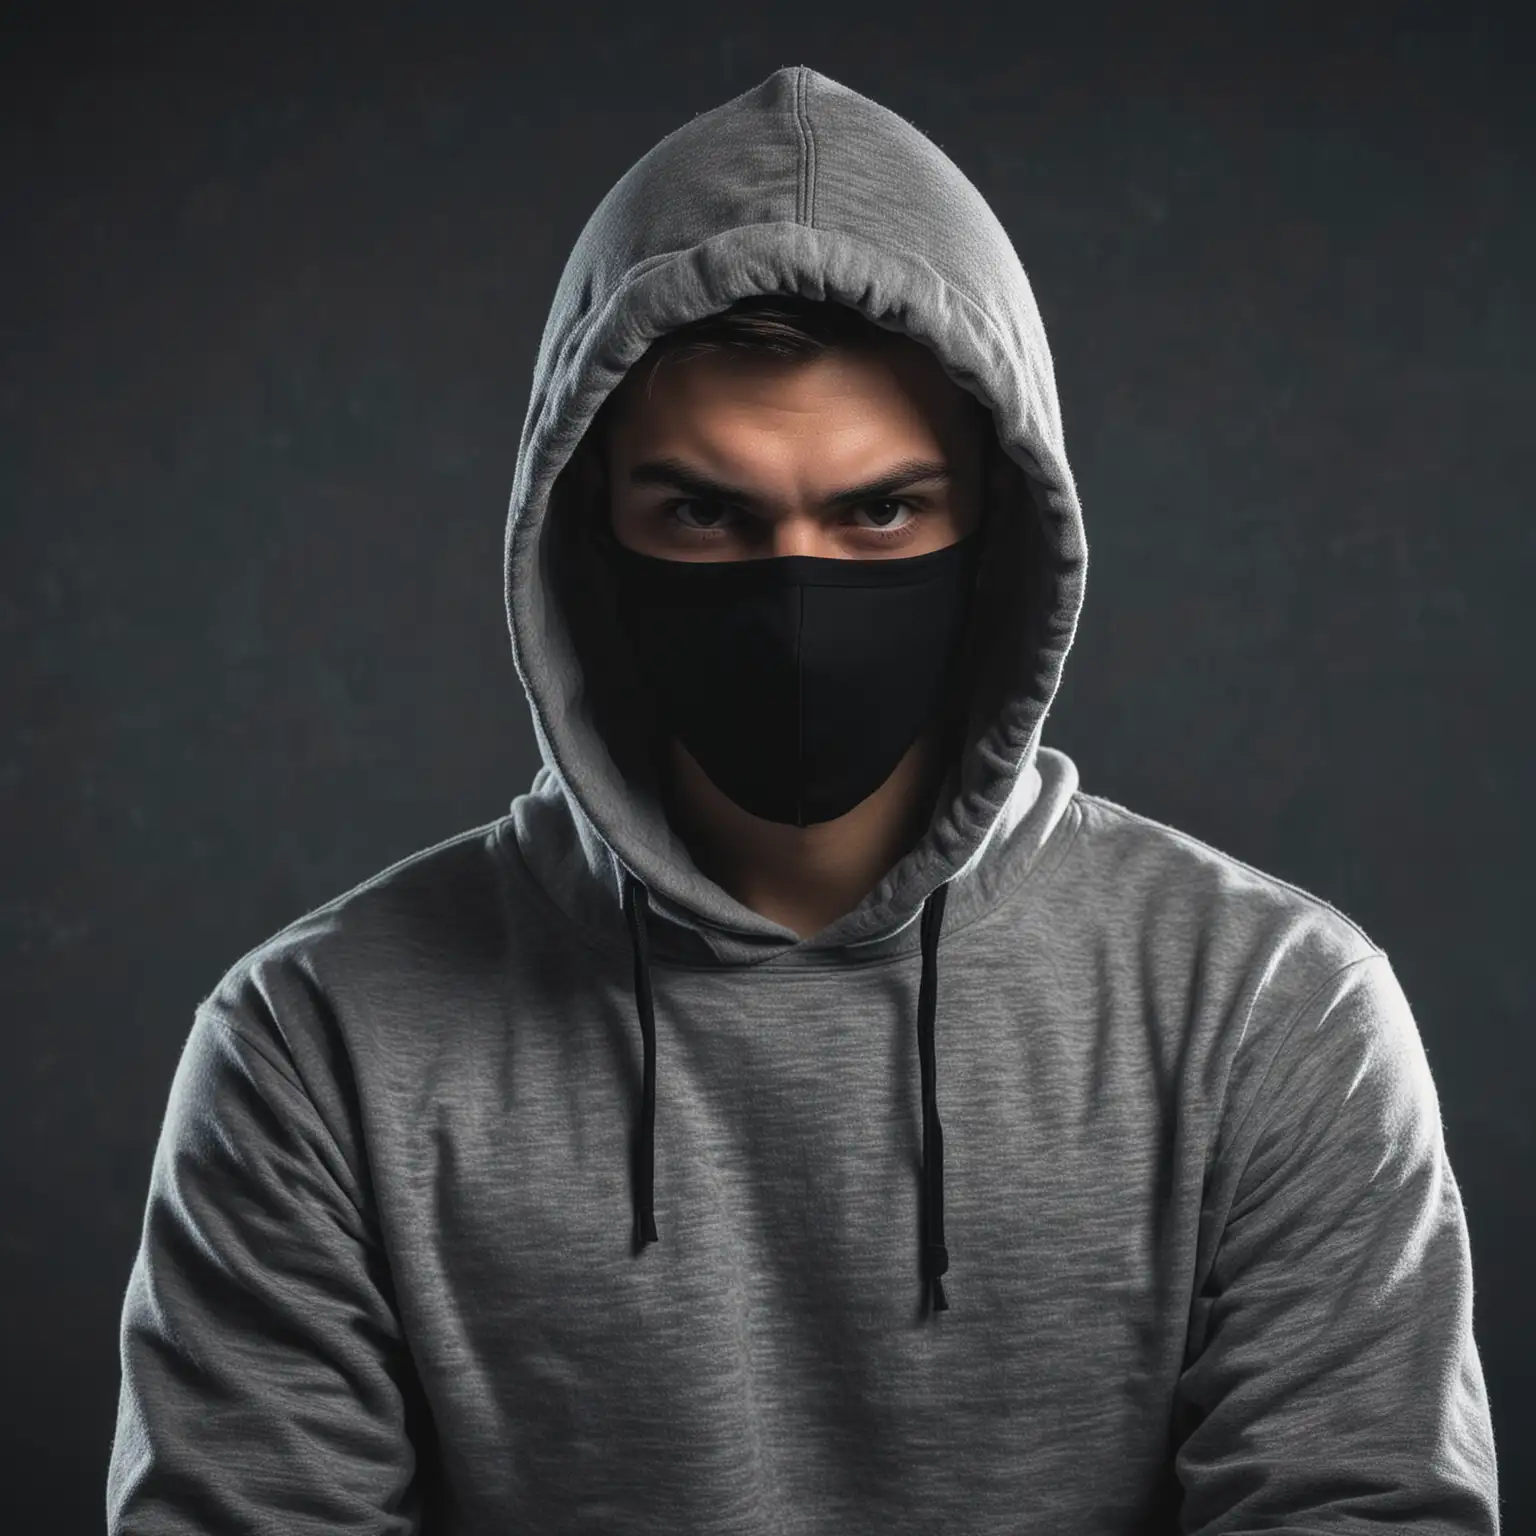 Serious 24YearOld Hacker in Hoodie and Mask in Dark Computer Room